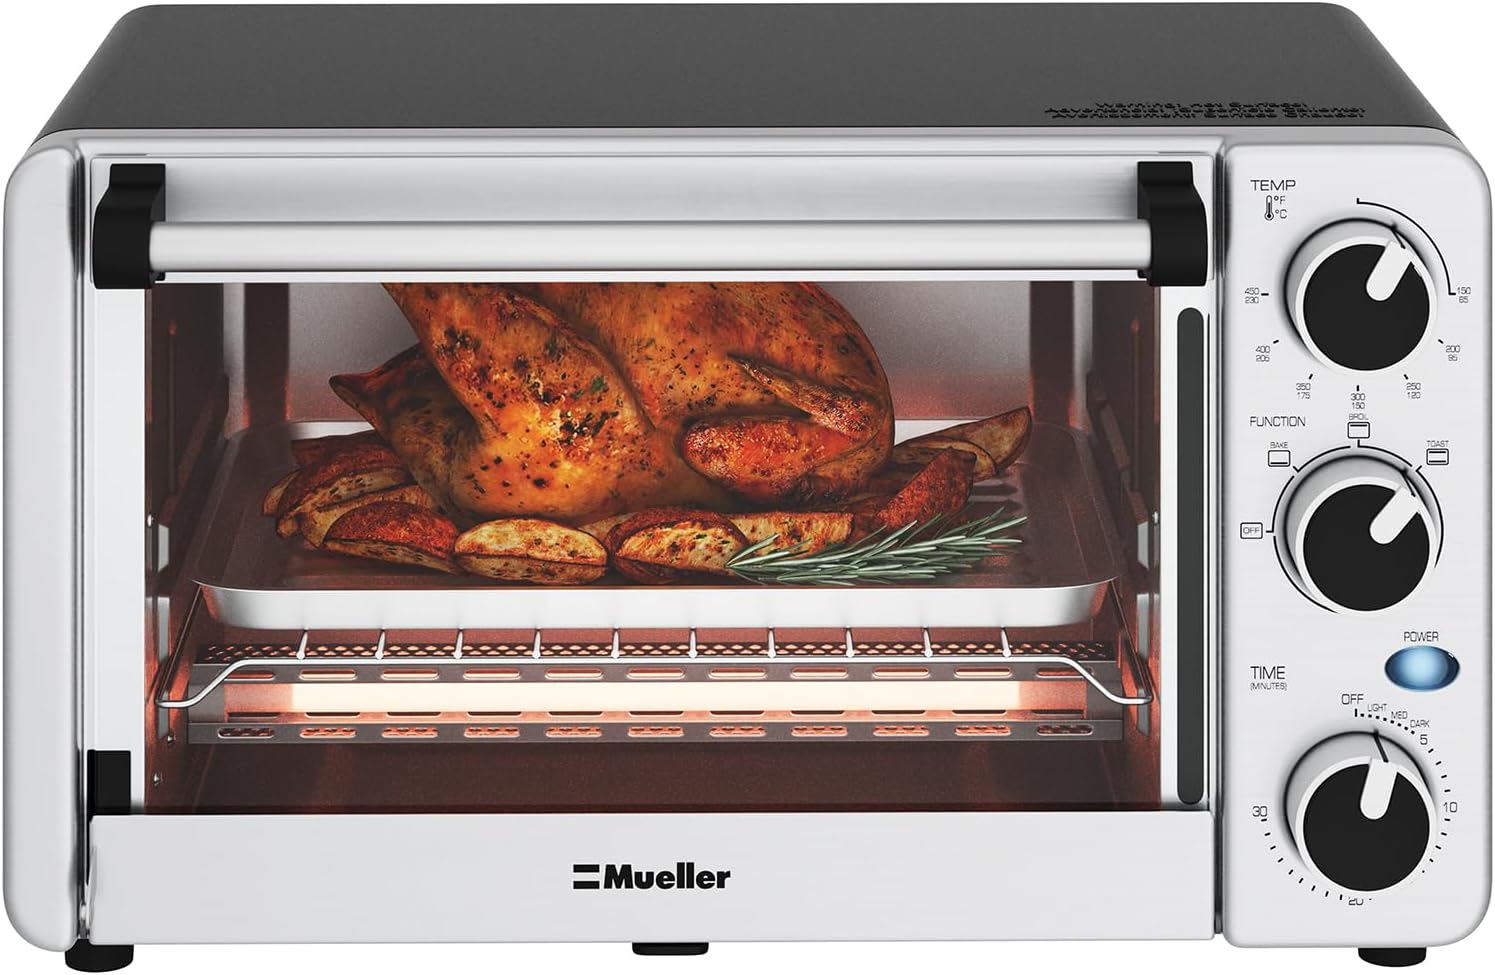 Toaster Oven 4 Slice, Multi-function Stainless Steel [...]